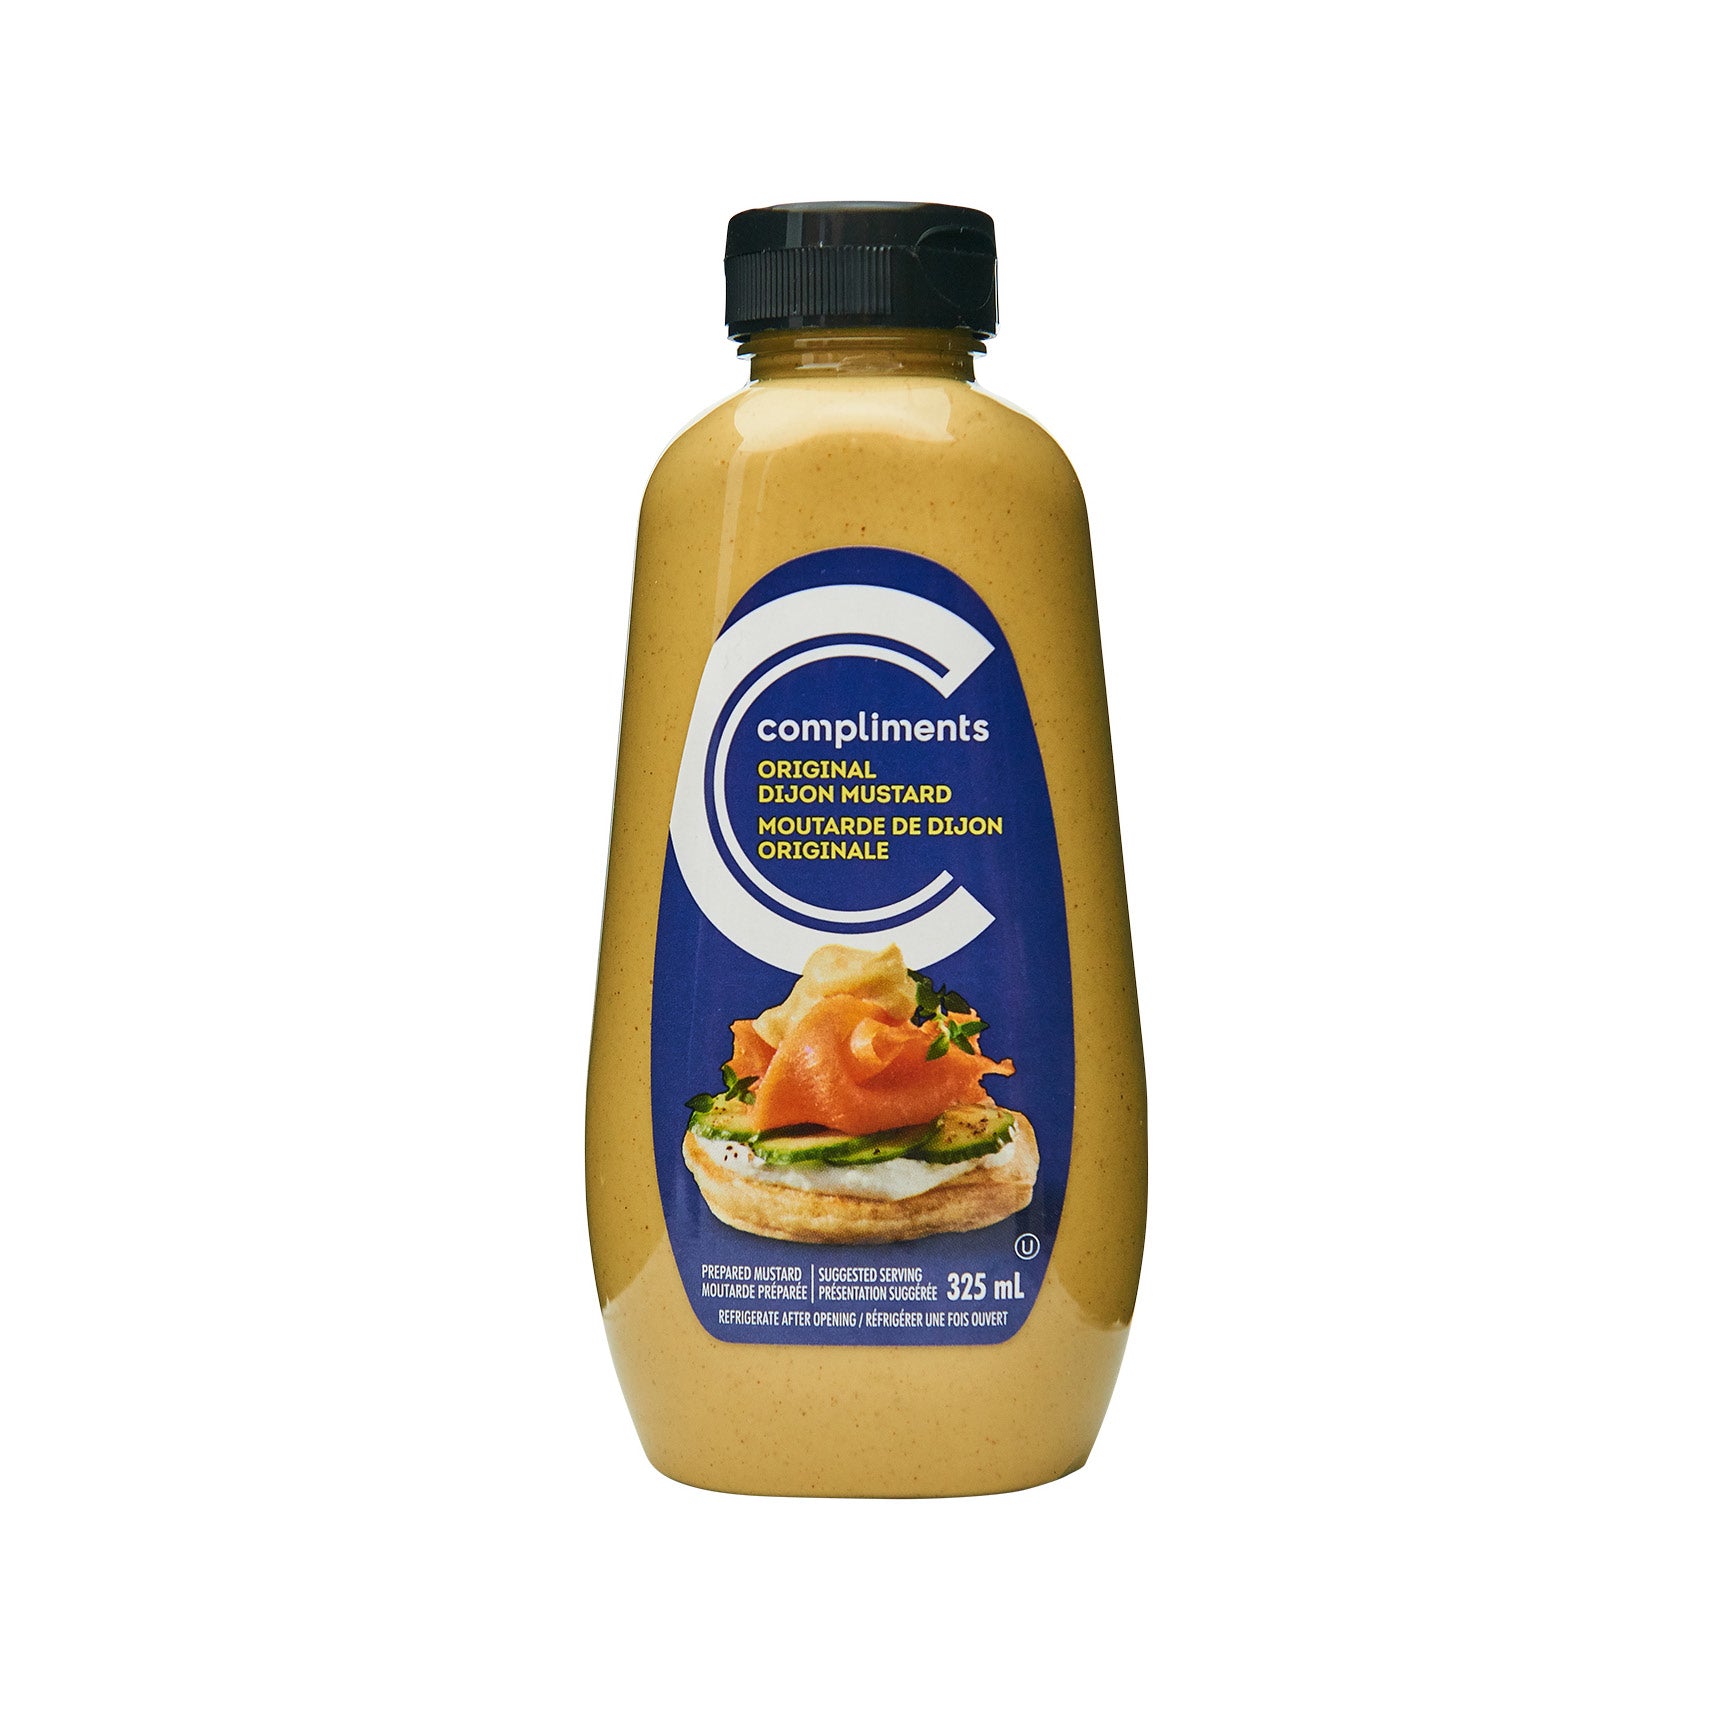 Compliments Prepared Mustard, Original Dijon, 325ml